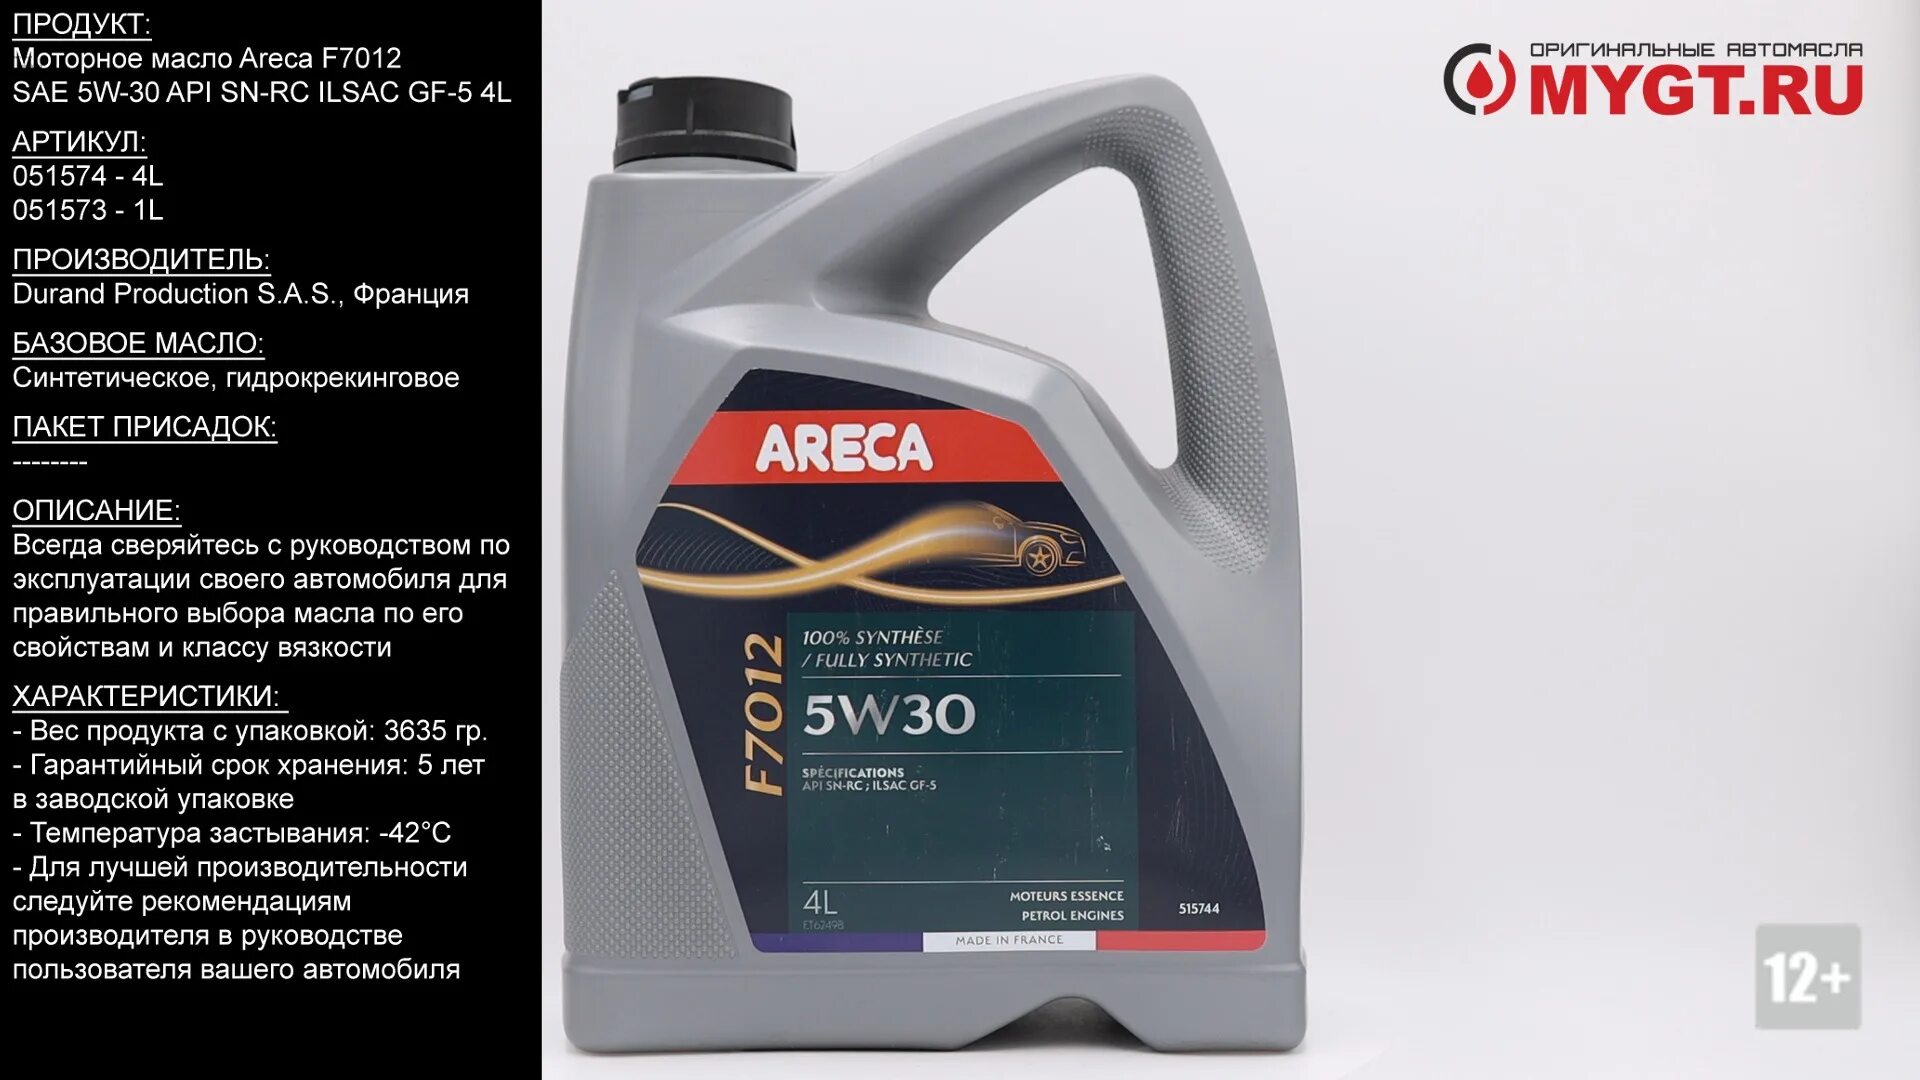 Areca 5w30 gf5. Моторное масло SAE w30. Масло моторное синтетическое Platinum 5w-30, 4л ILSAC gf-5 API SN. Французское масло моторное Areca.